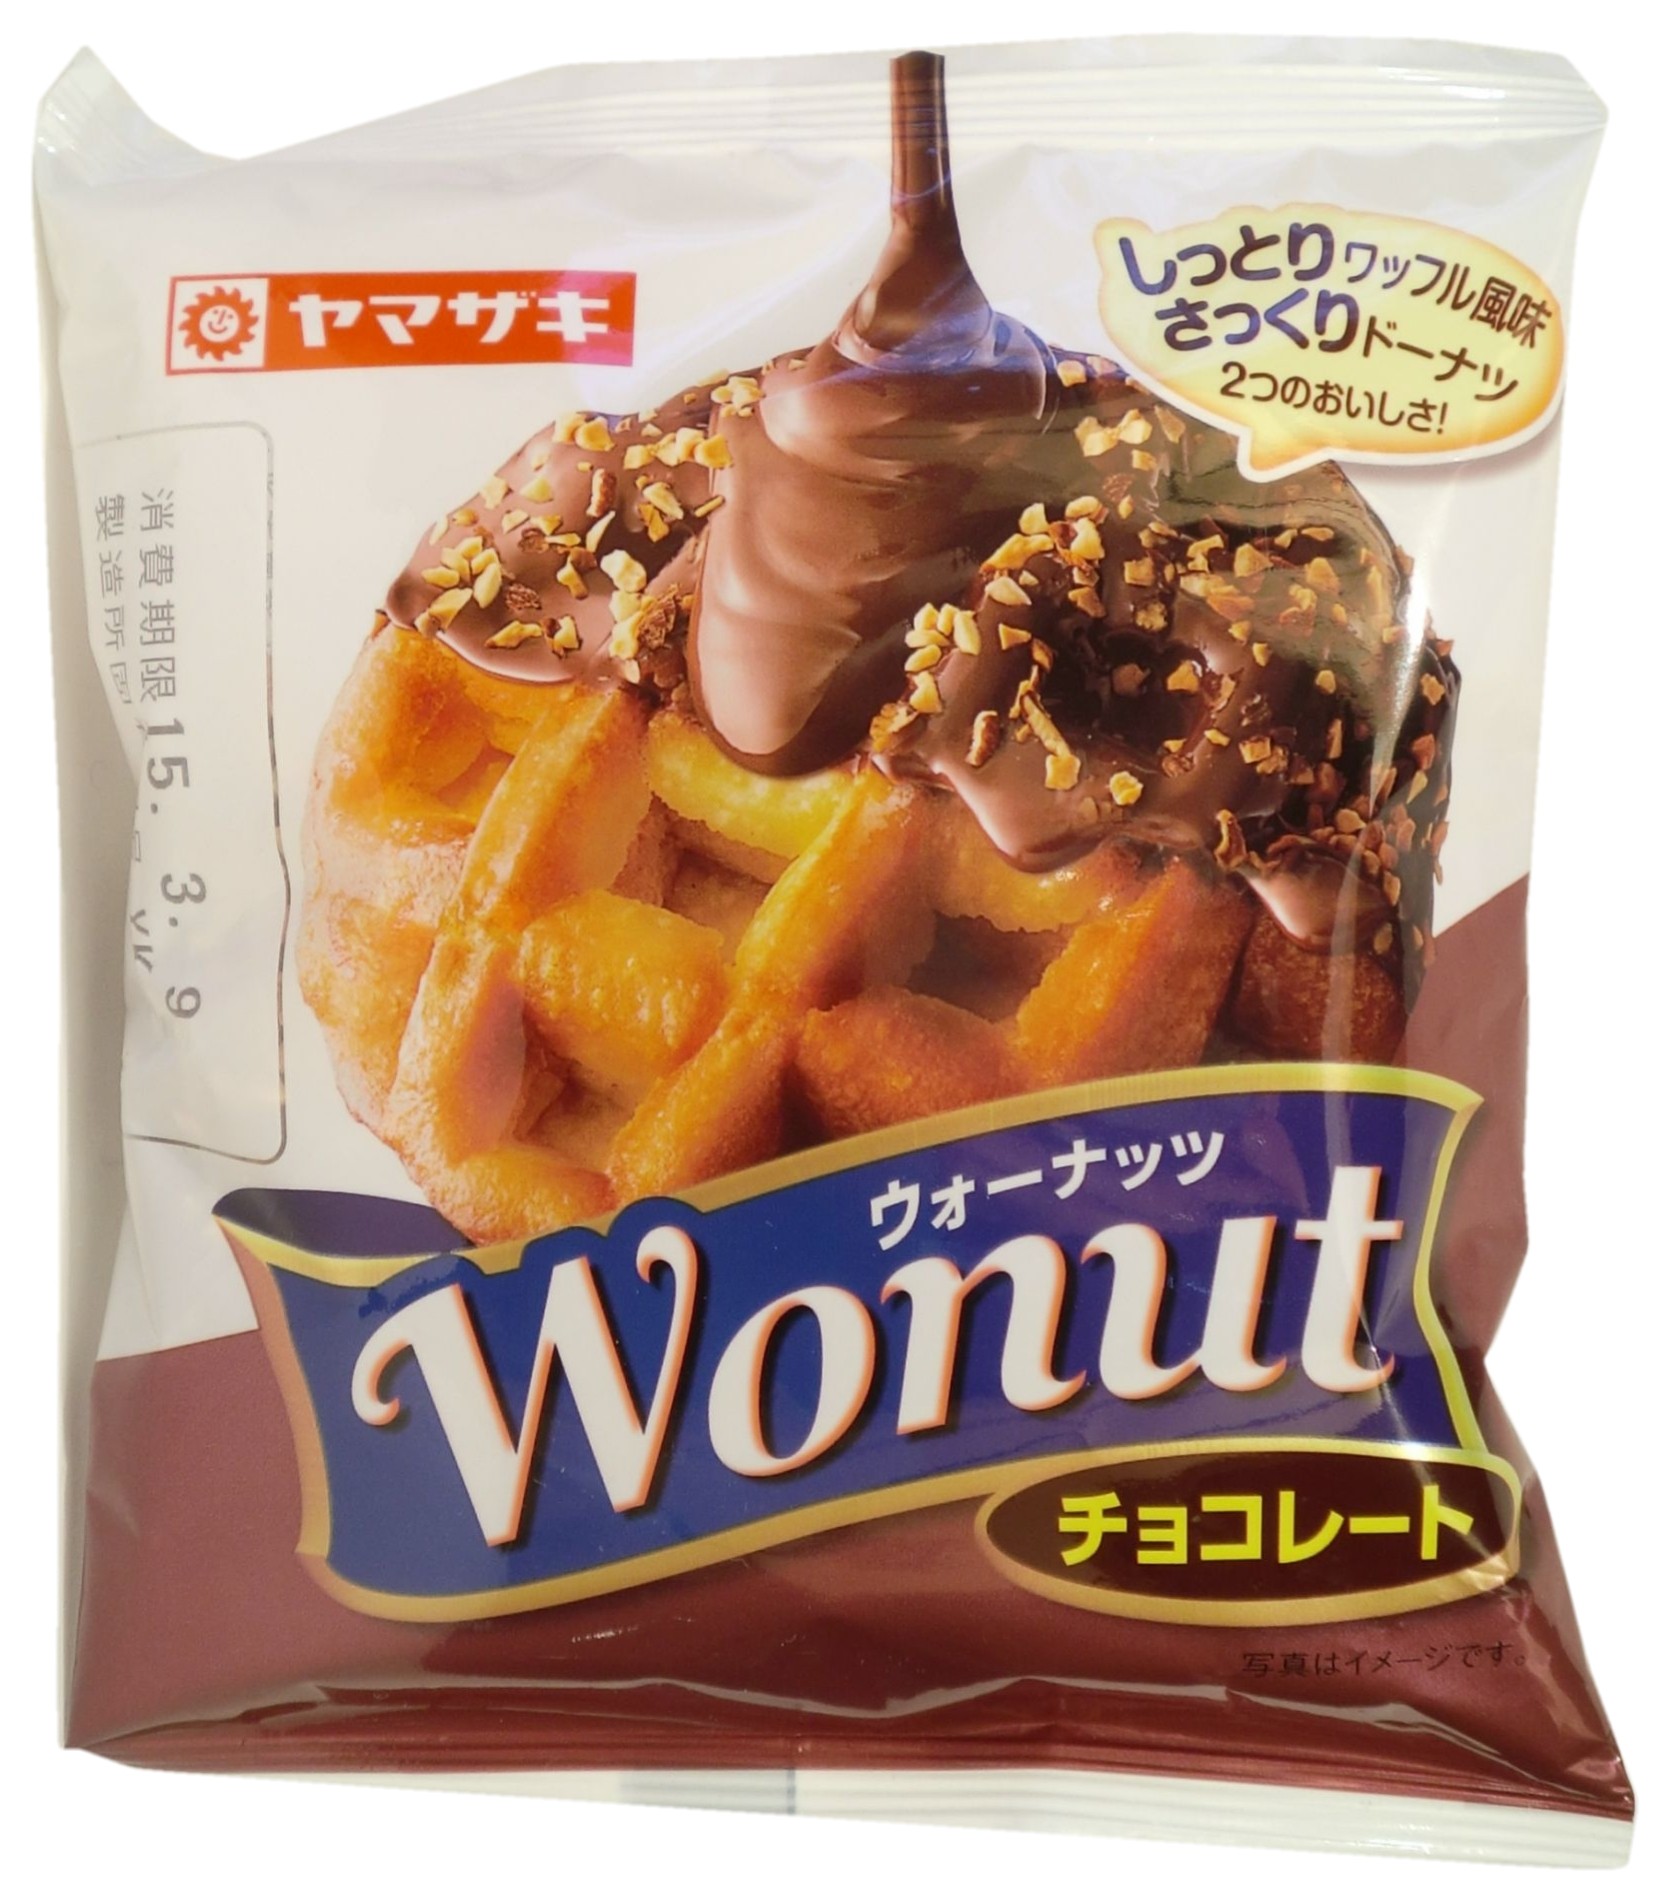 Yamazaki Wonut Chocolate Waffle Doughnut